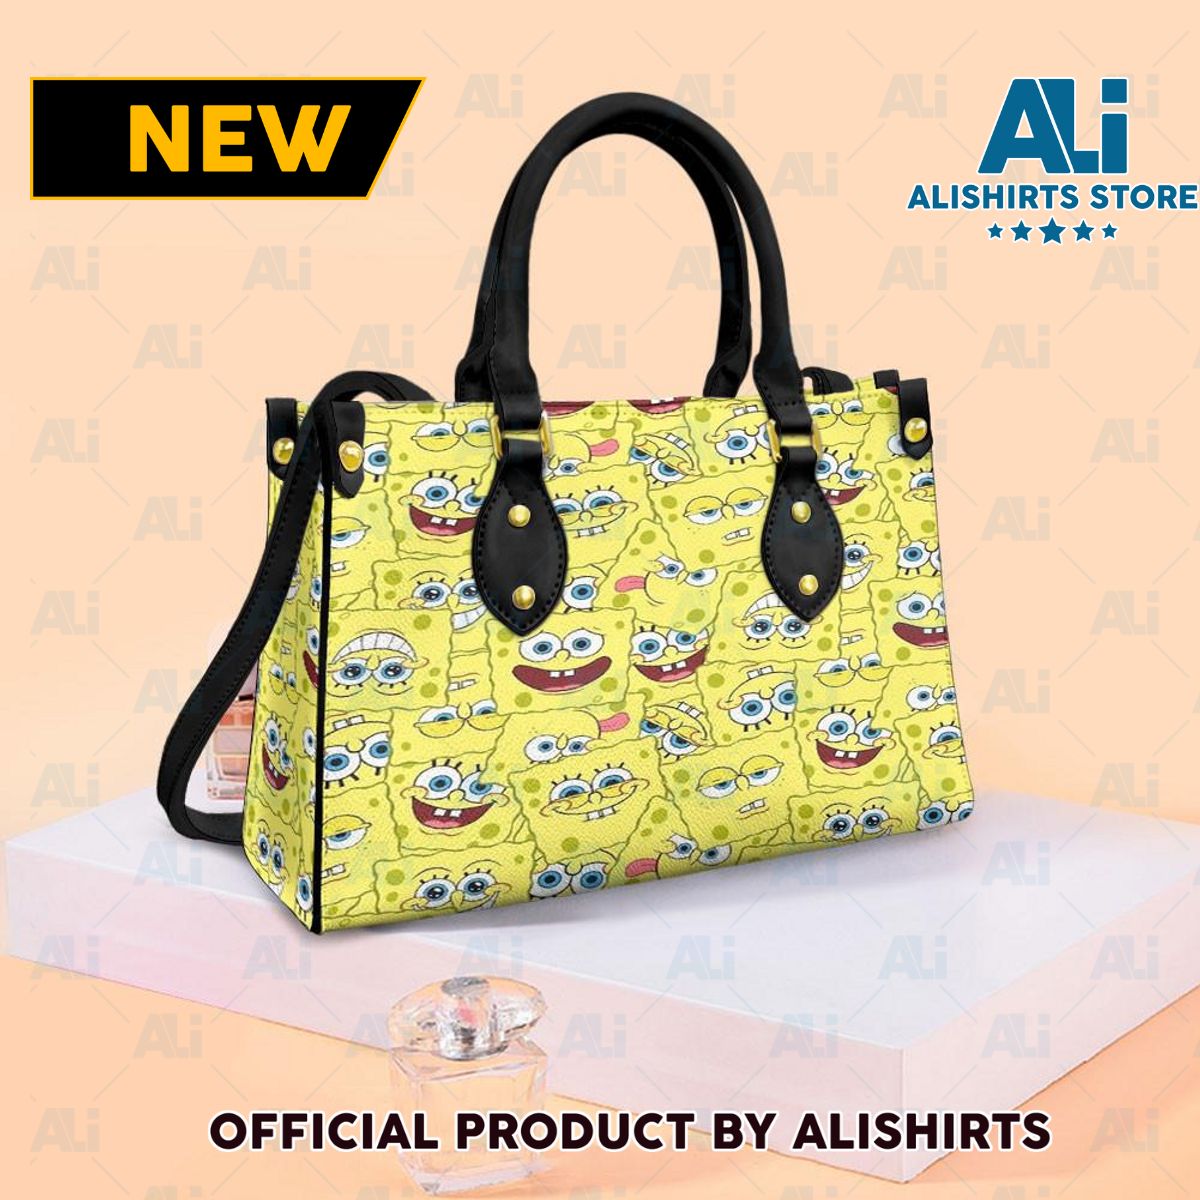 Spongebob Squarepants Comedy Television Series Personalized Leather HandBags Women Tote Bag